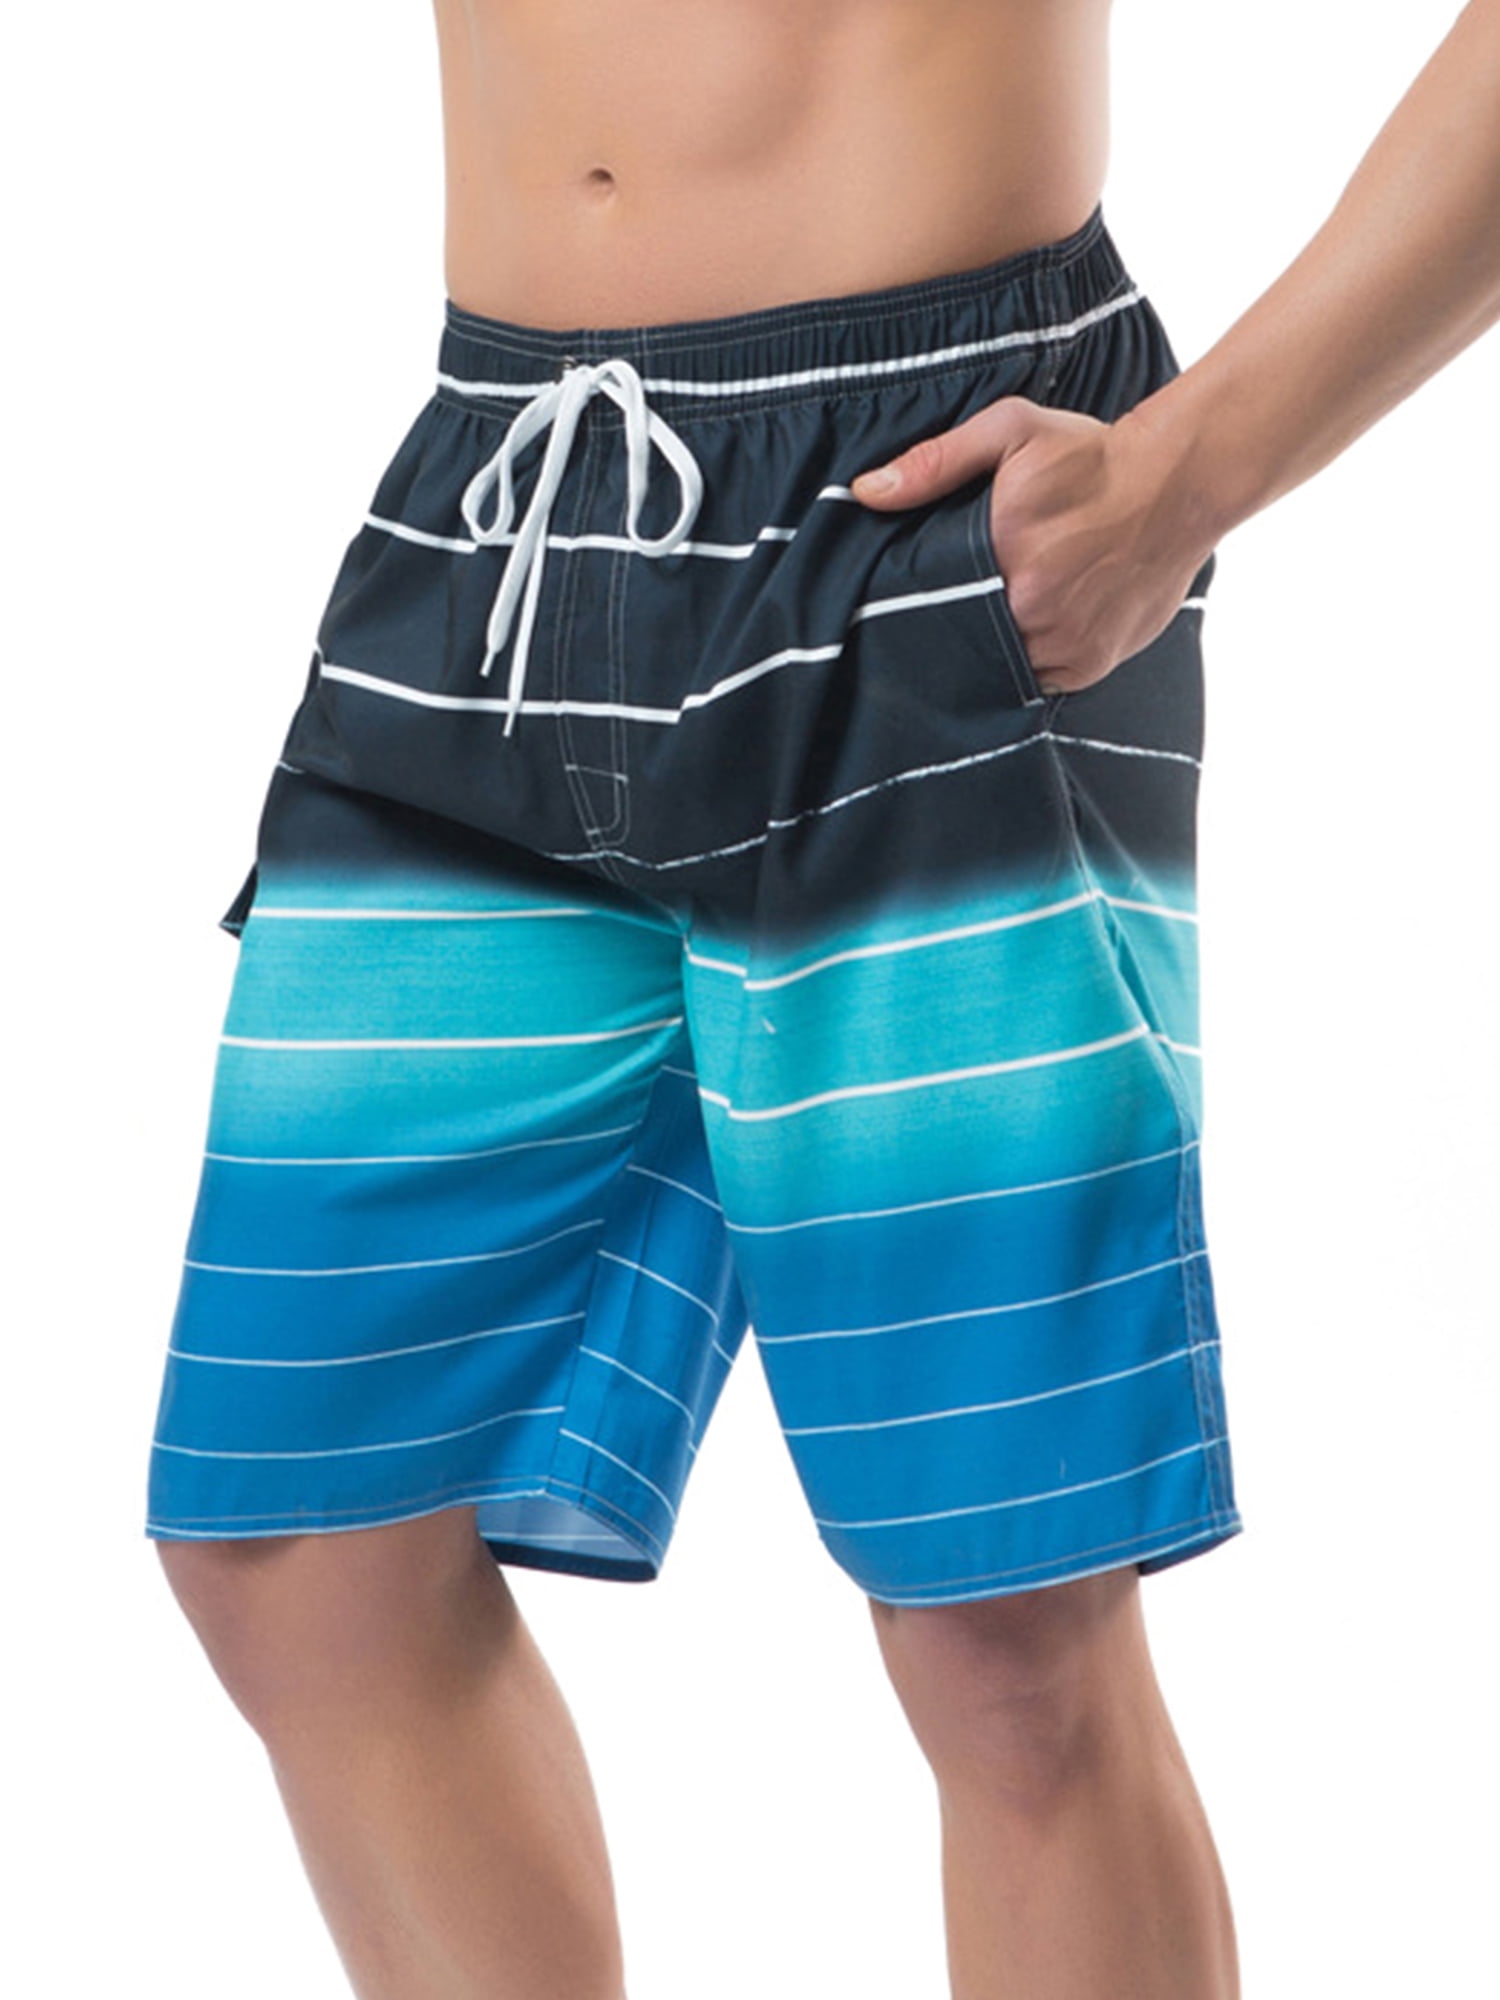 Mens Beach Shorts Quick Dry Paw Prints Summer Holiday Mesh Lining Swimwear Board Shorts with Pockets